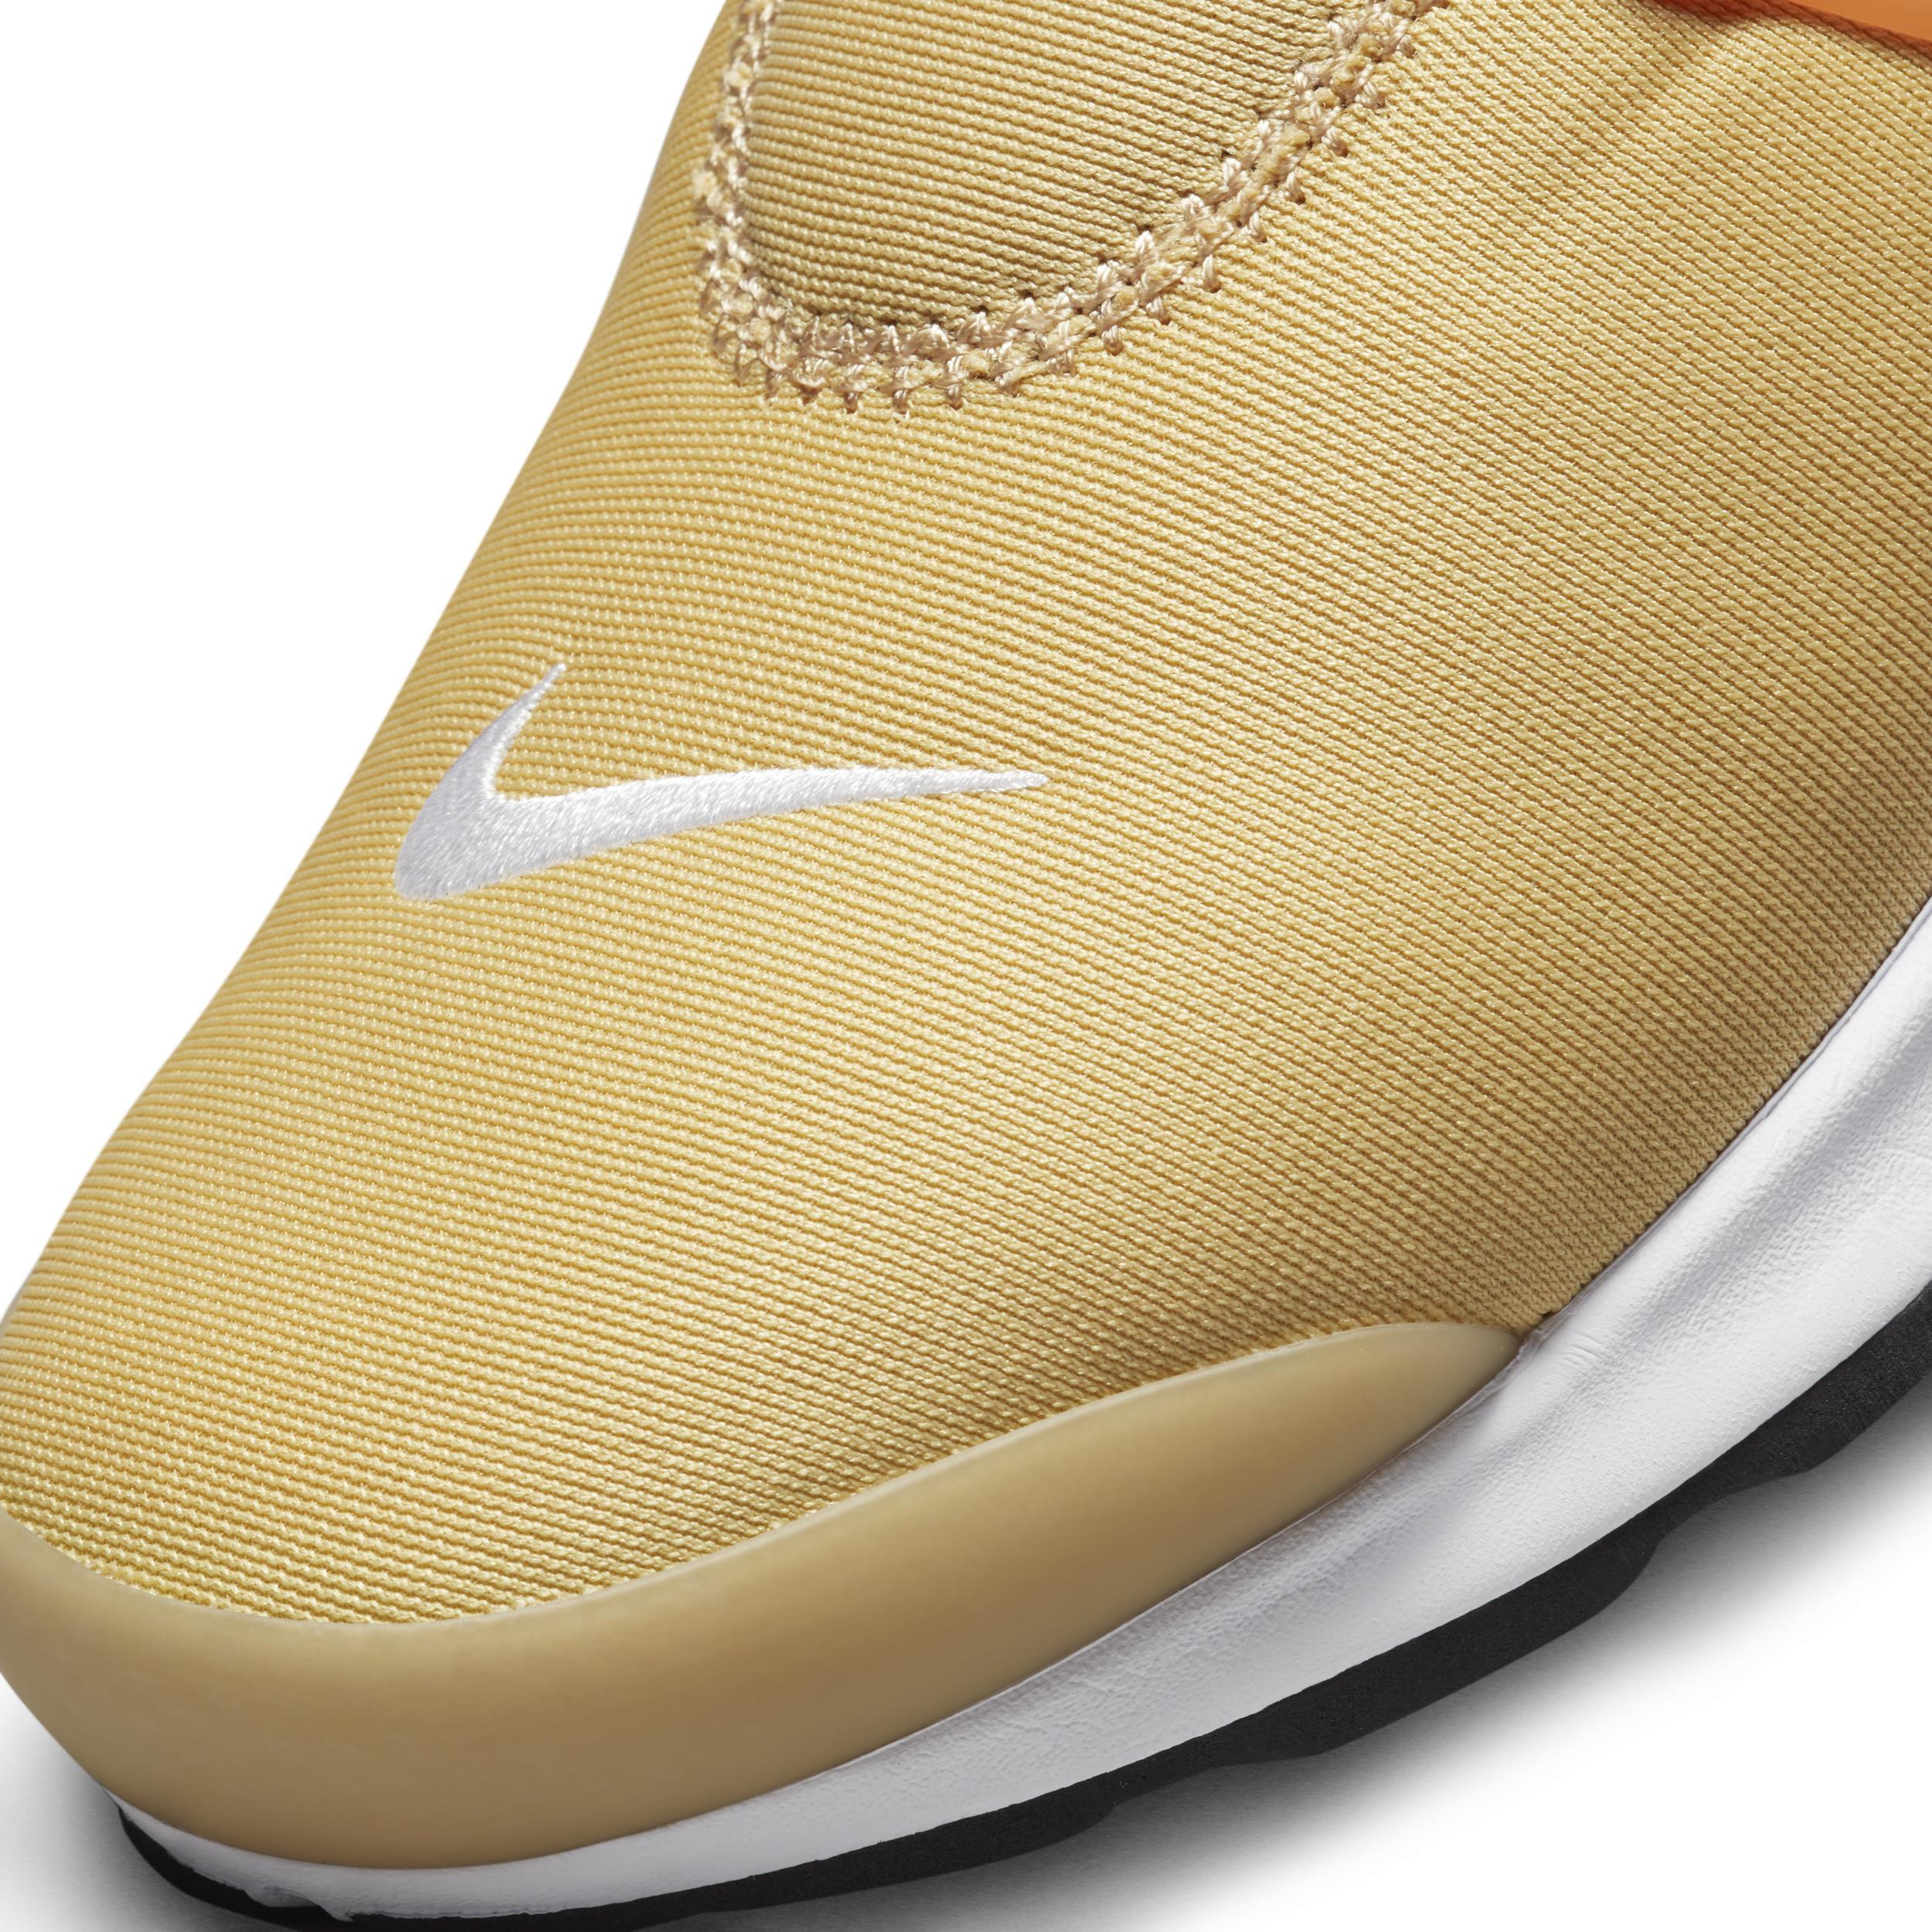 Nike Air Presto Sneaker Product Image